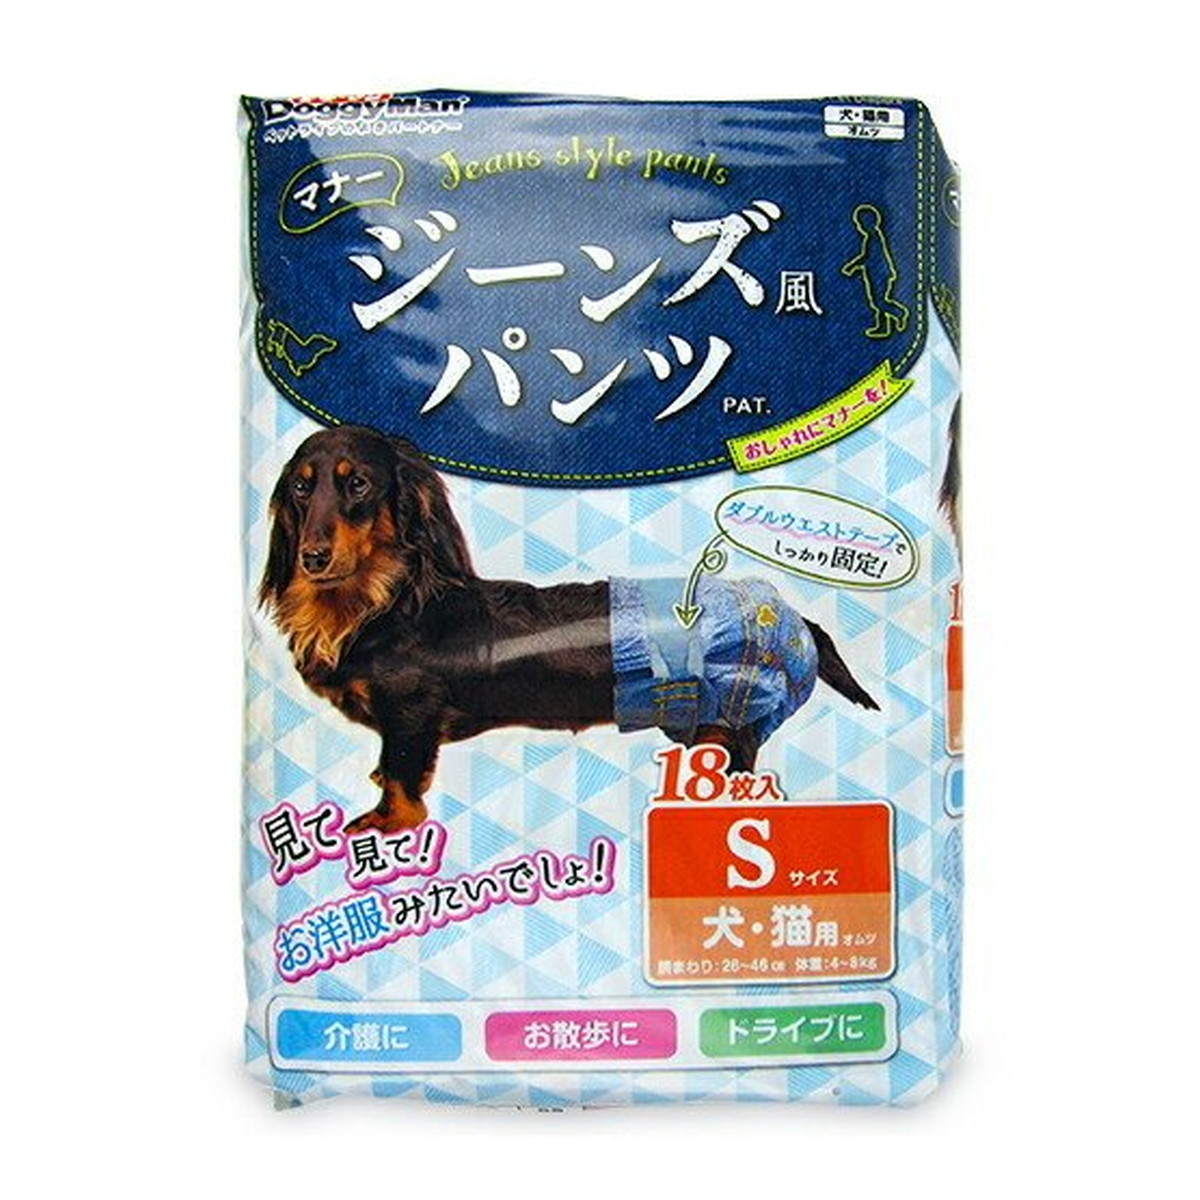 【92%OFF!】 66%OFF ドギーマン DoggyMan ジーンズ風パンツ S 18枚入 犬 猫用オムツ tanakademi.com tanakademi.com